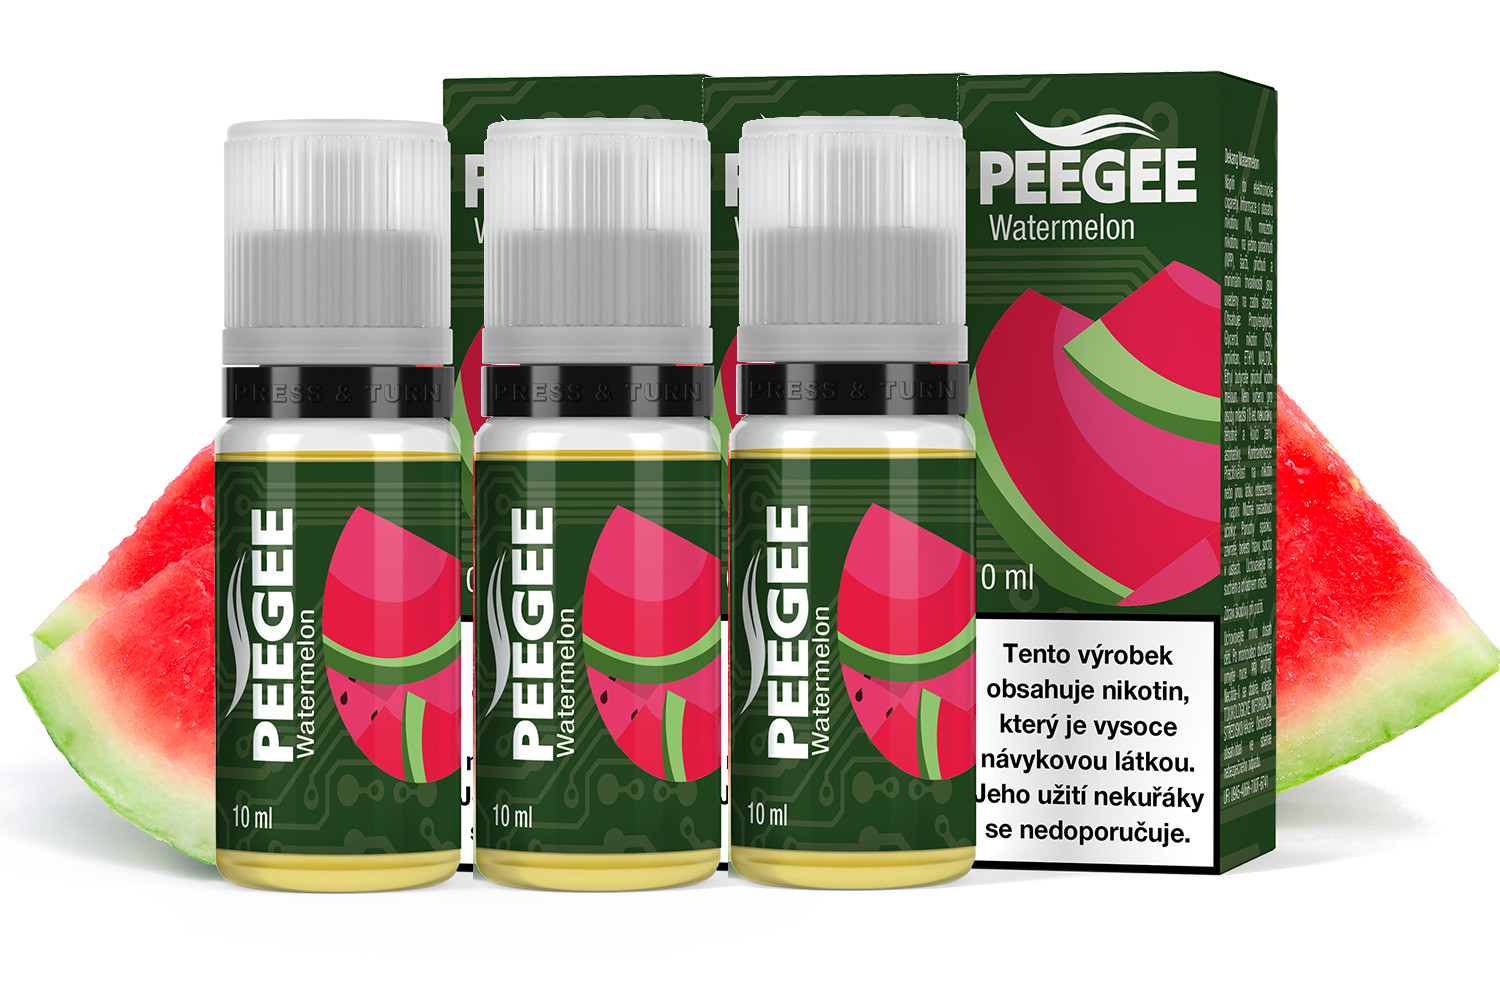 PEEGEE - Vodní meloun (Watermelon) 3x10ml Obsah nikotinu: 6mg